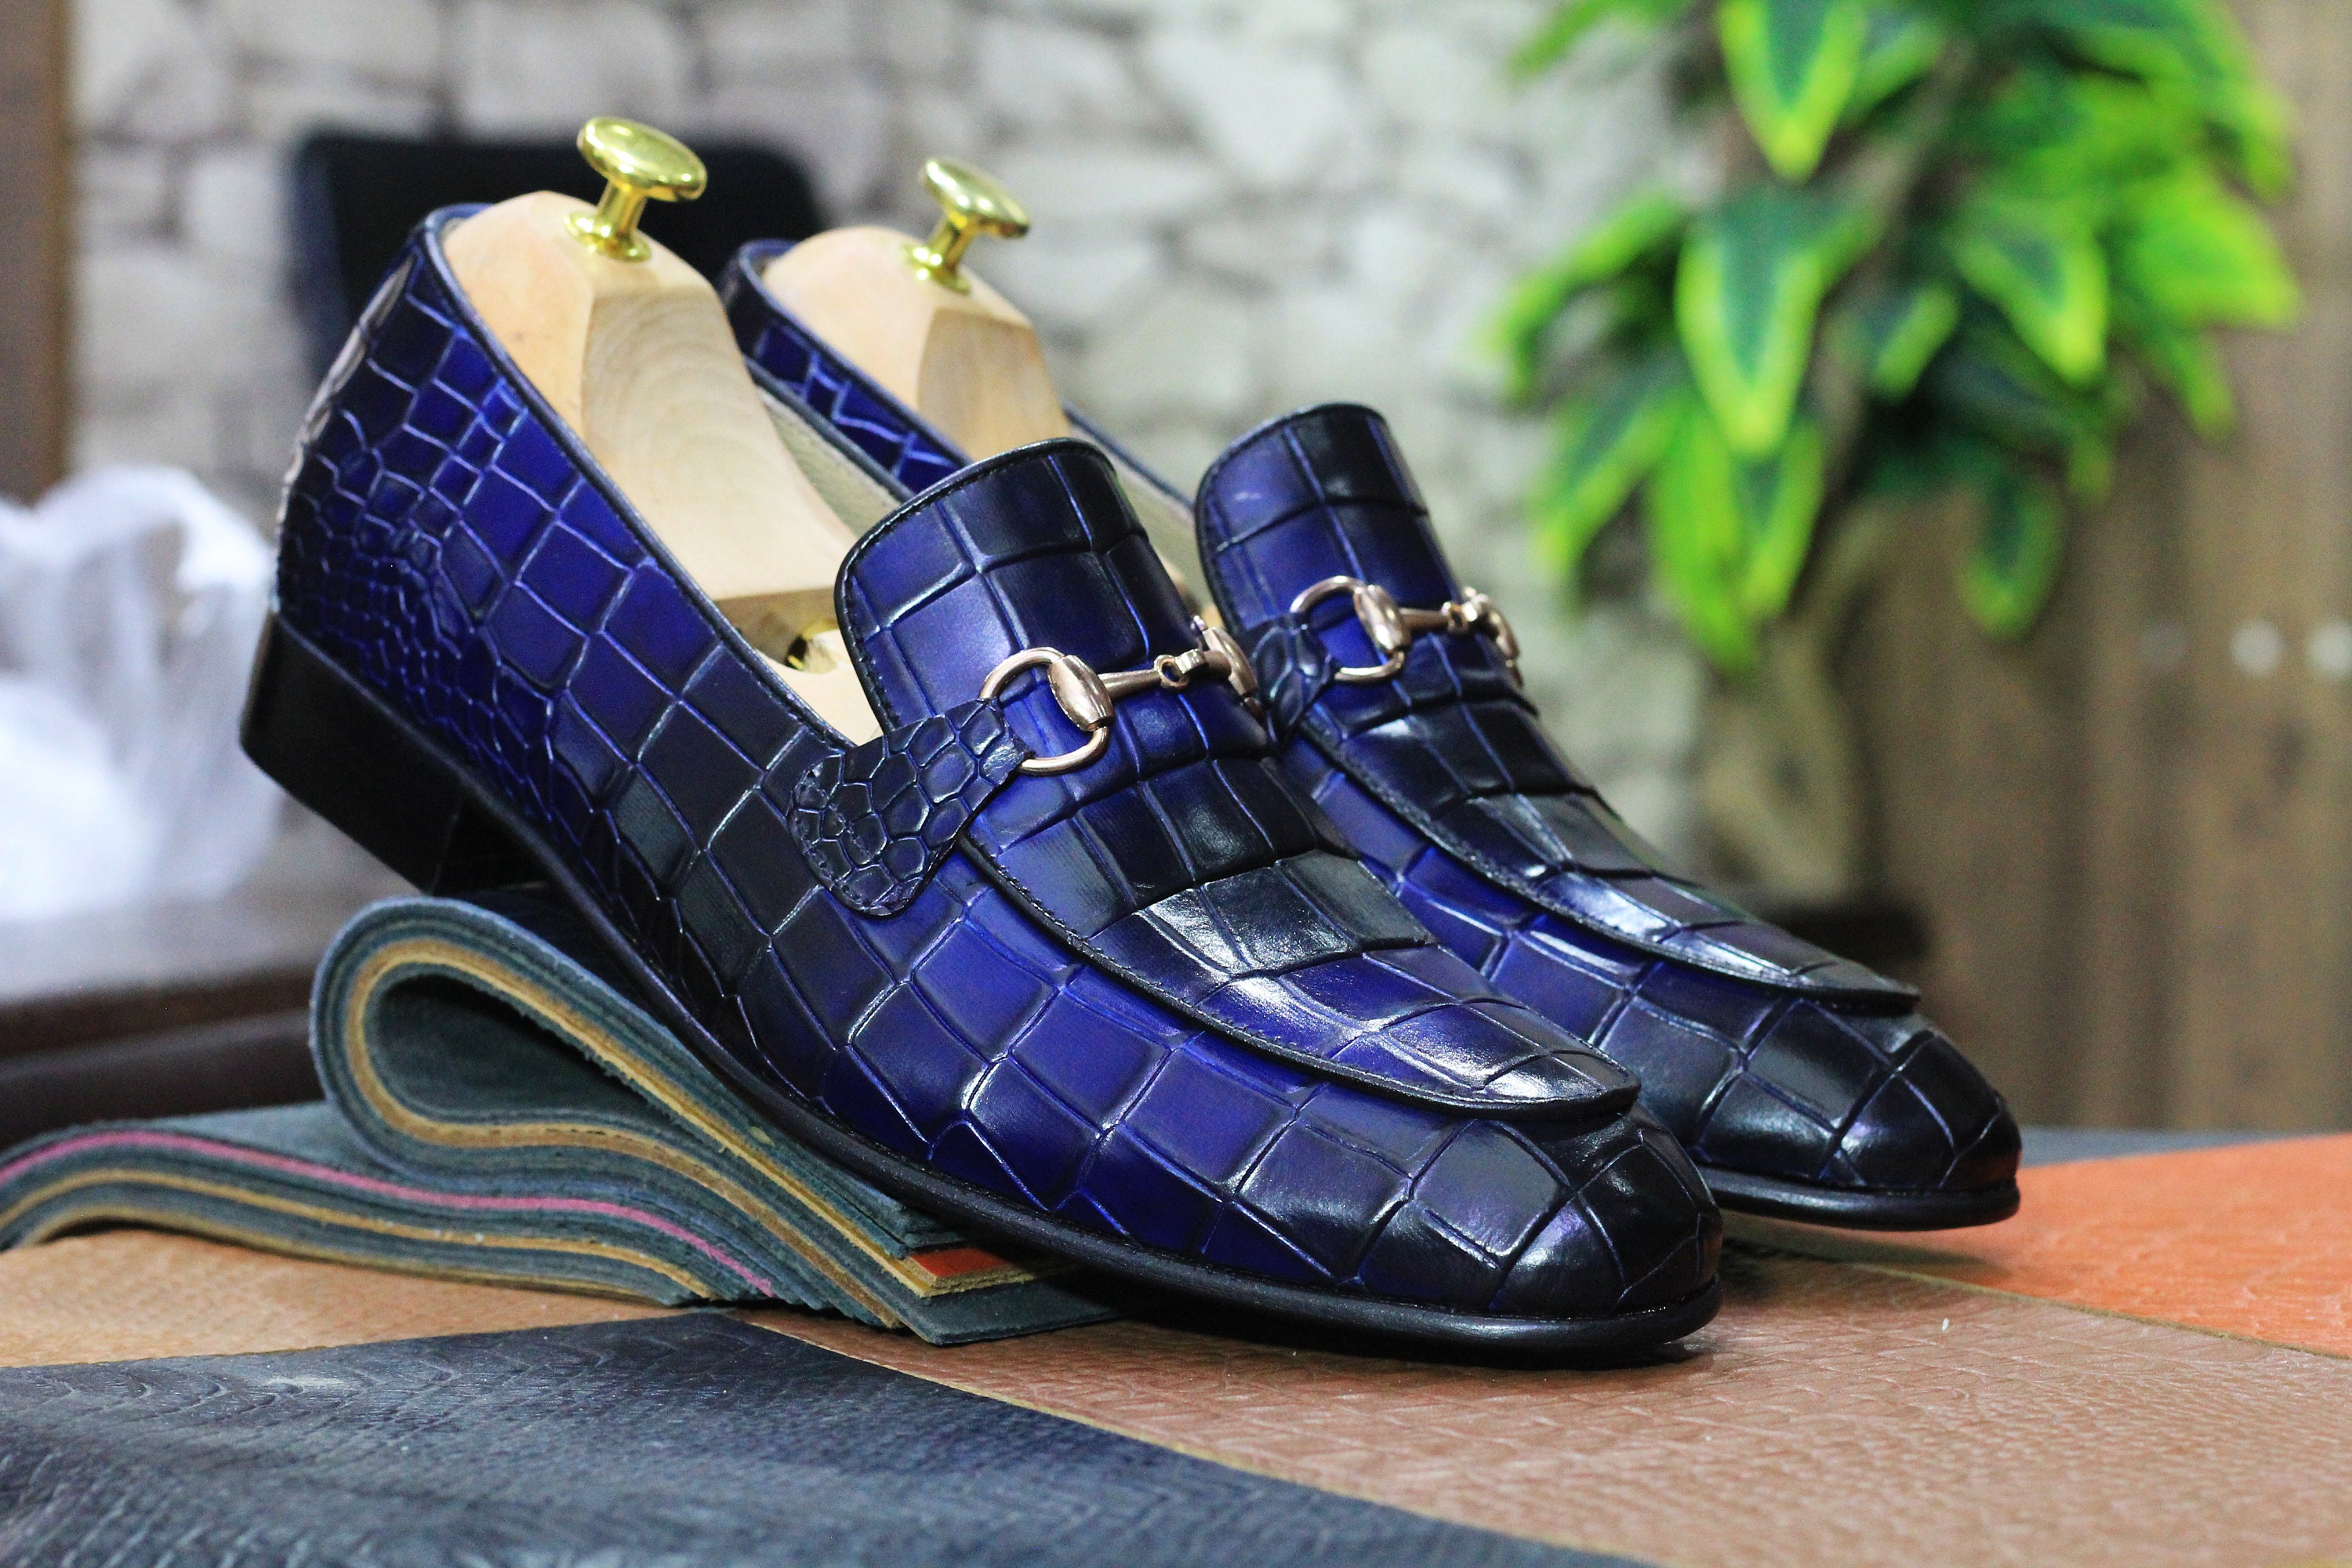 Mauri 3405/1 Scenic Men's Shoes Two-Tone Blue Exotic Alligator